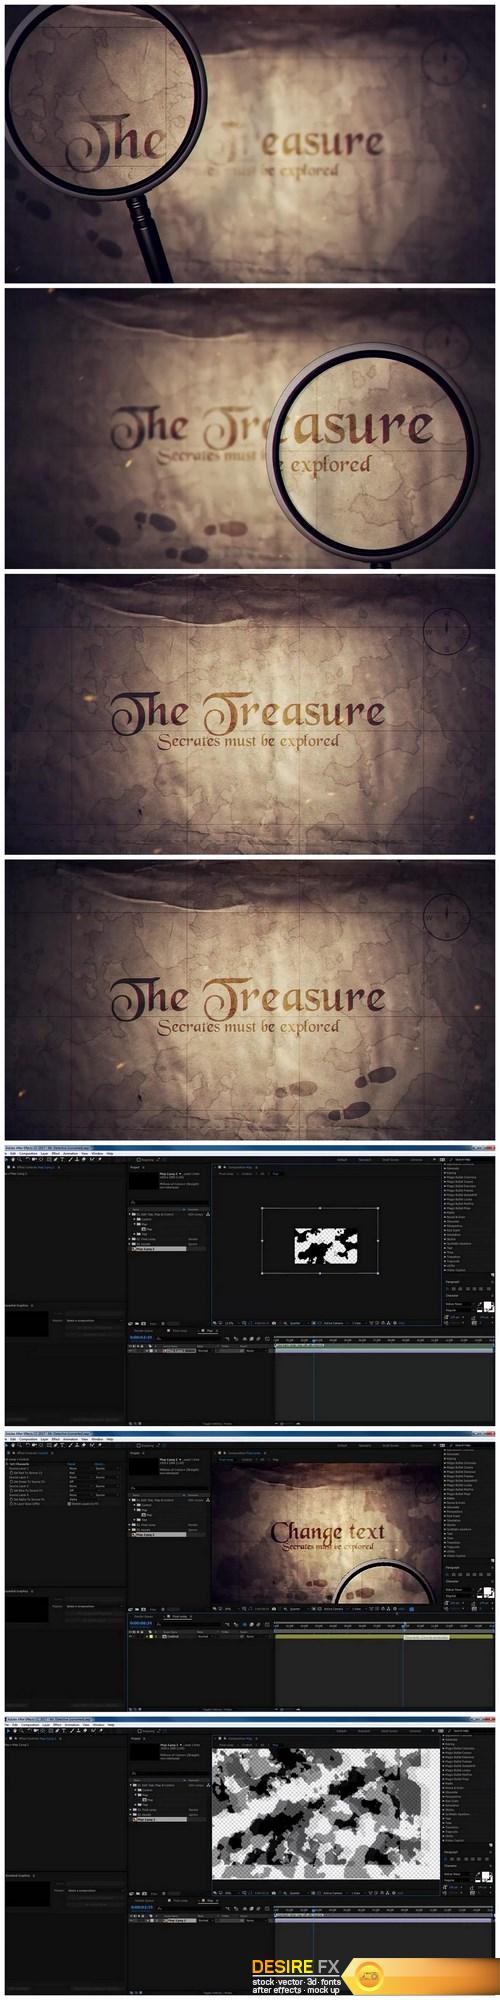 The-treasure-39965